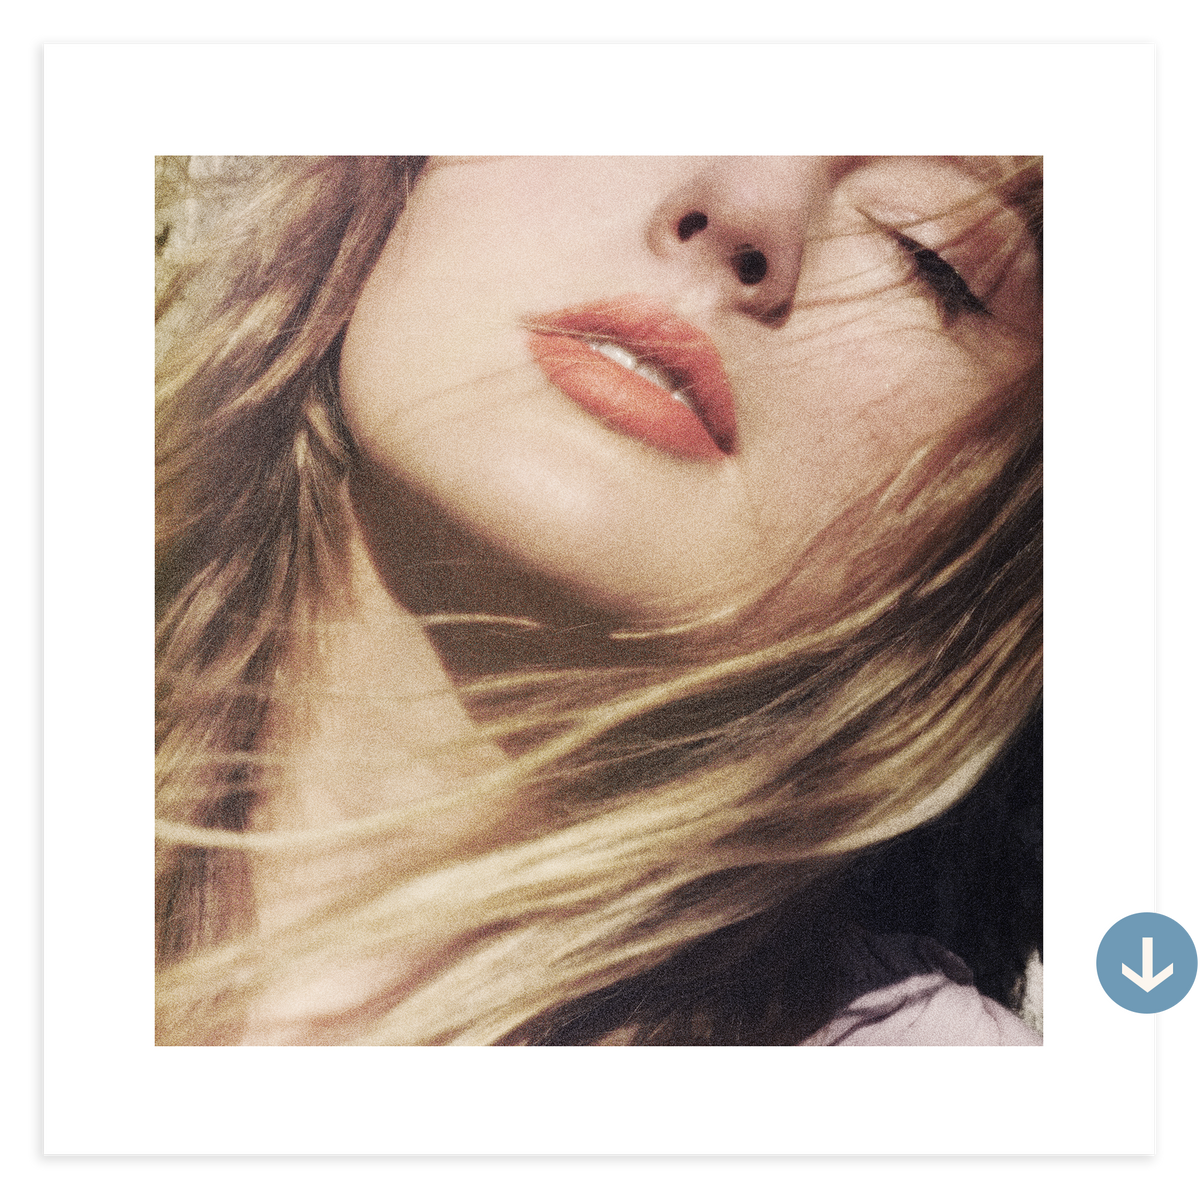 1989 (Taylor's Version) Seagull Necklace + Digital Album